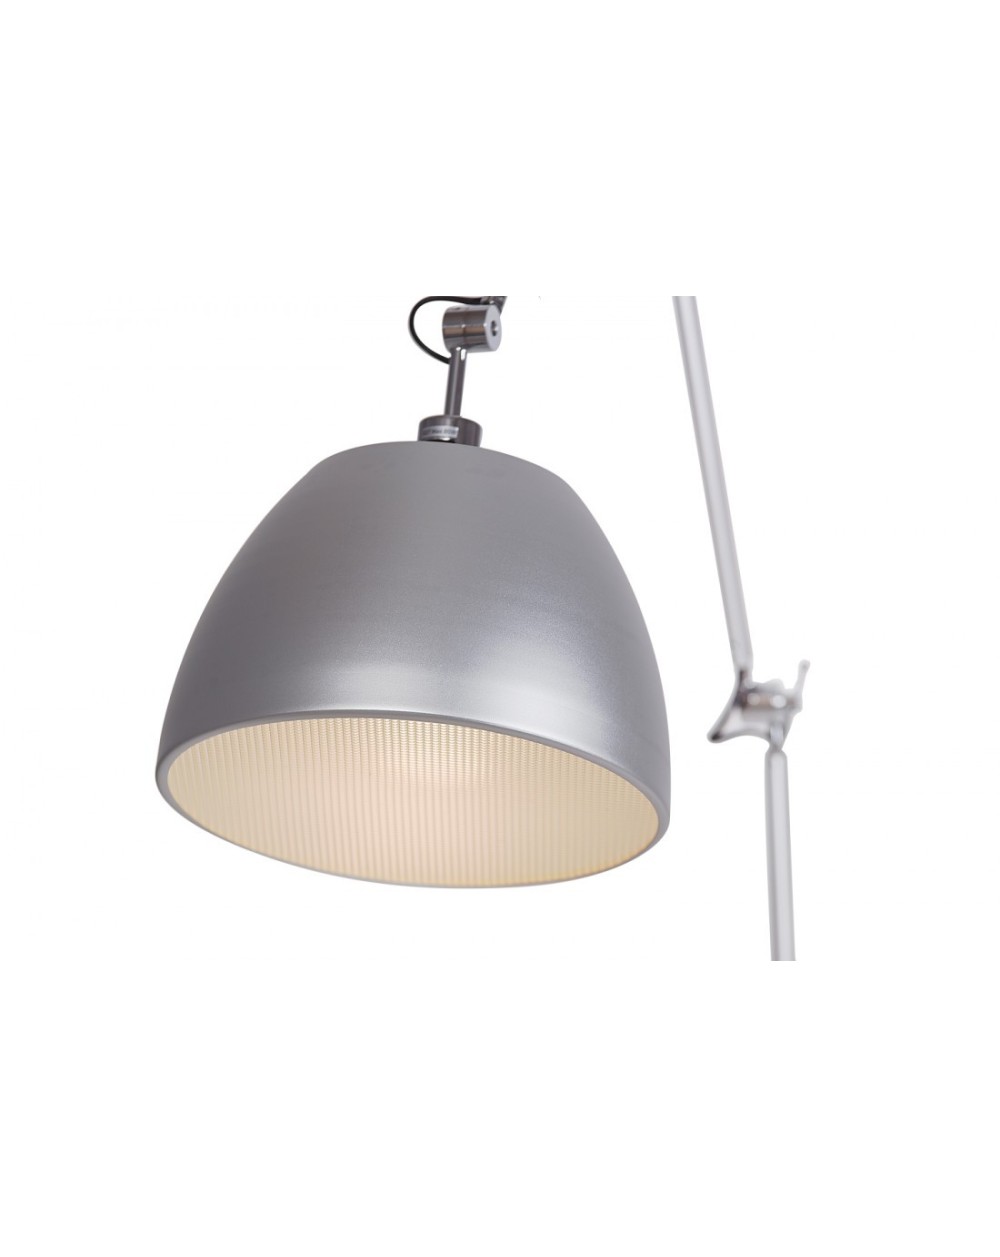 Lampa podłogowa ZYTA FLOOR aluminiowa